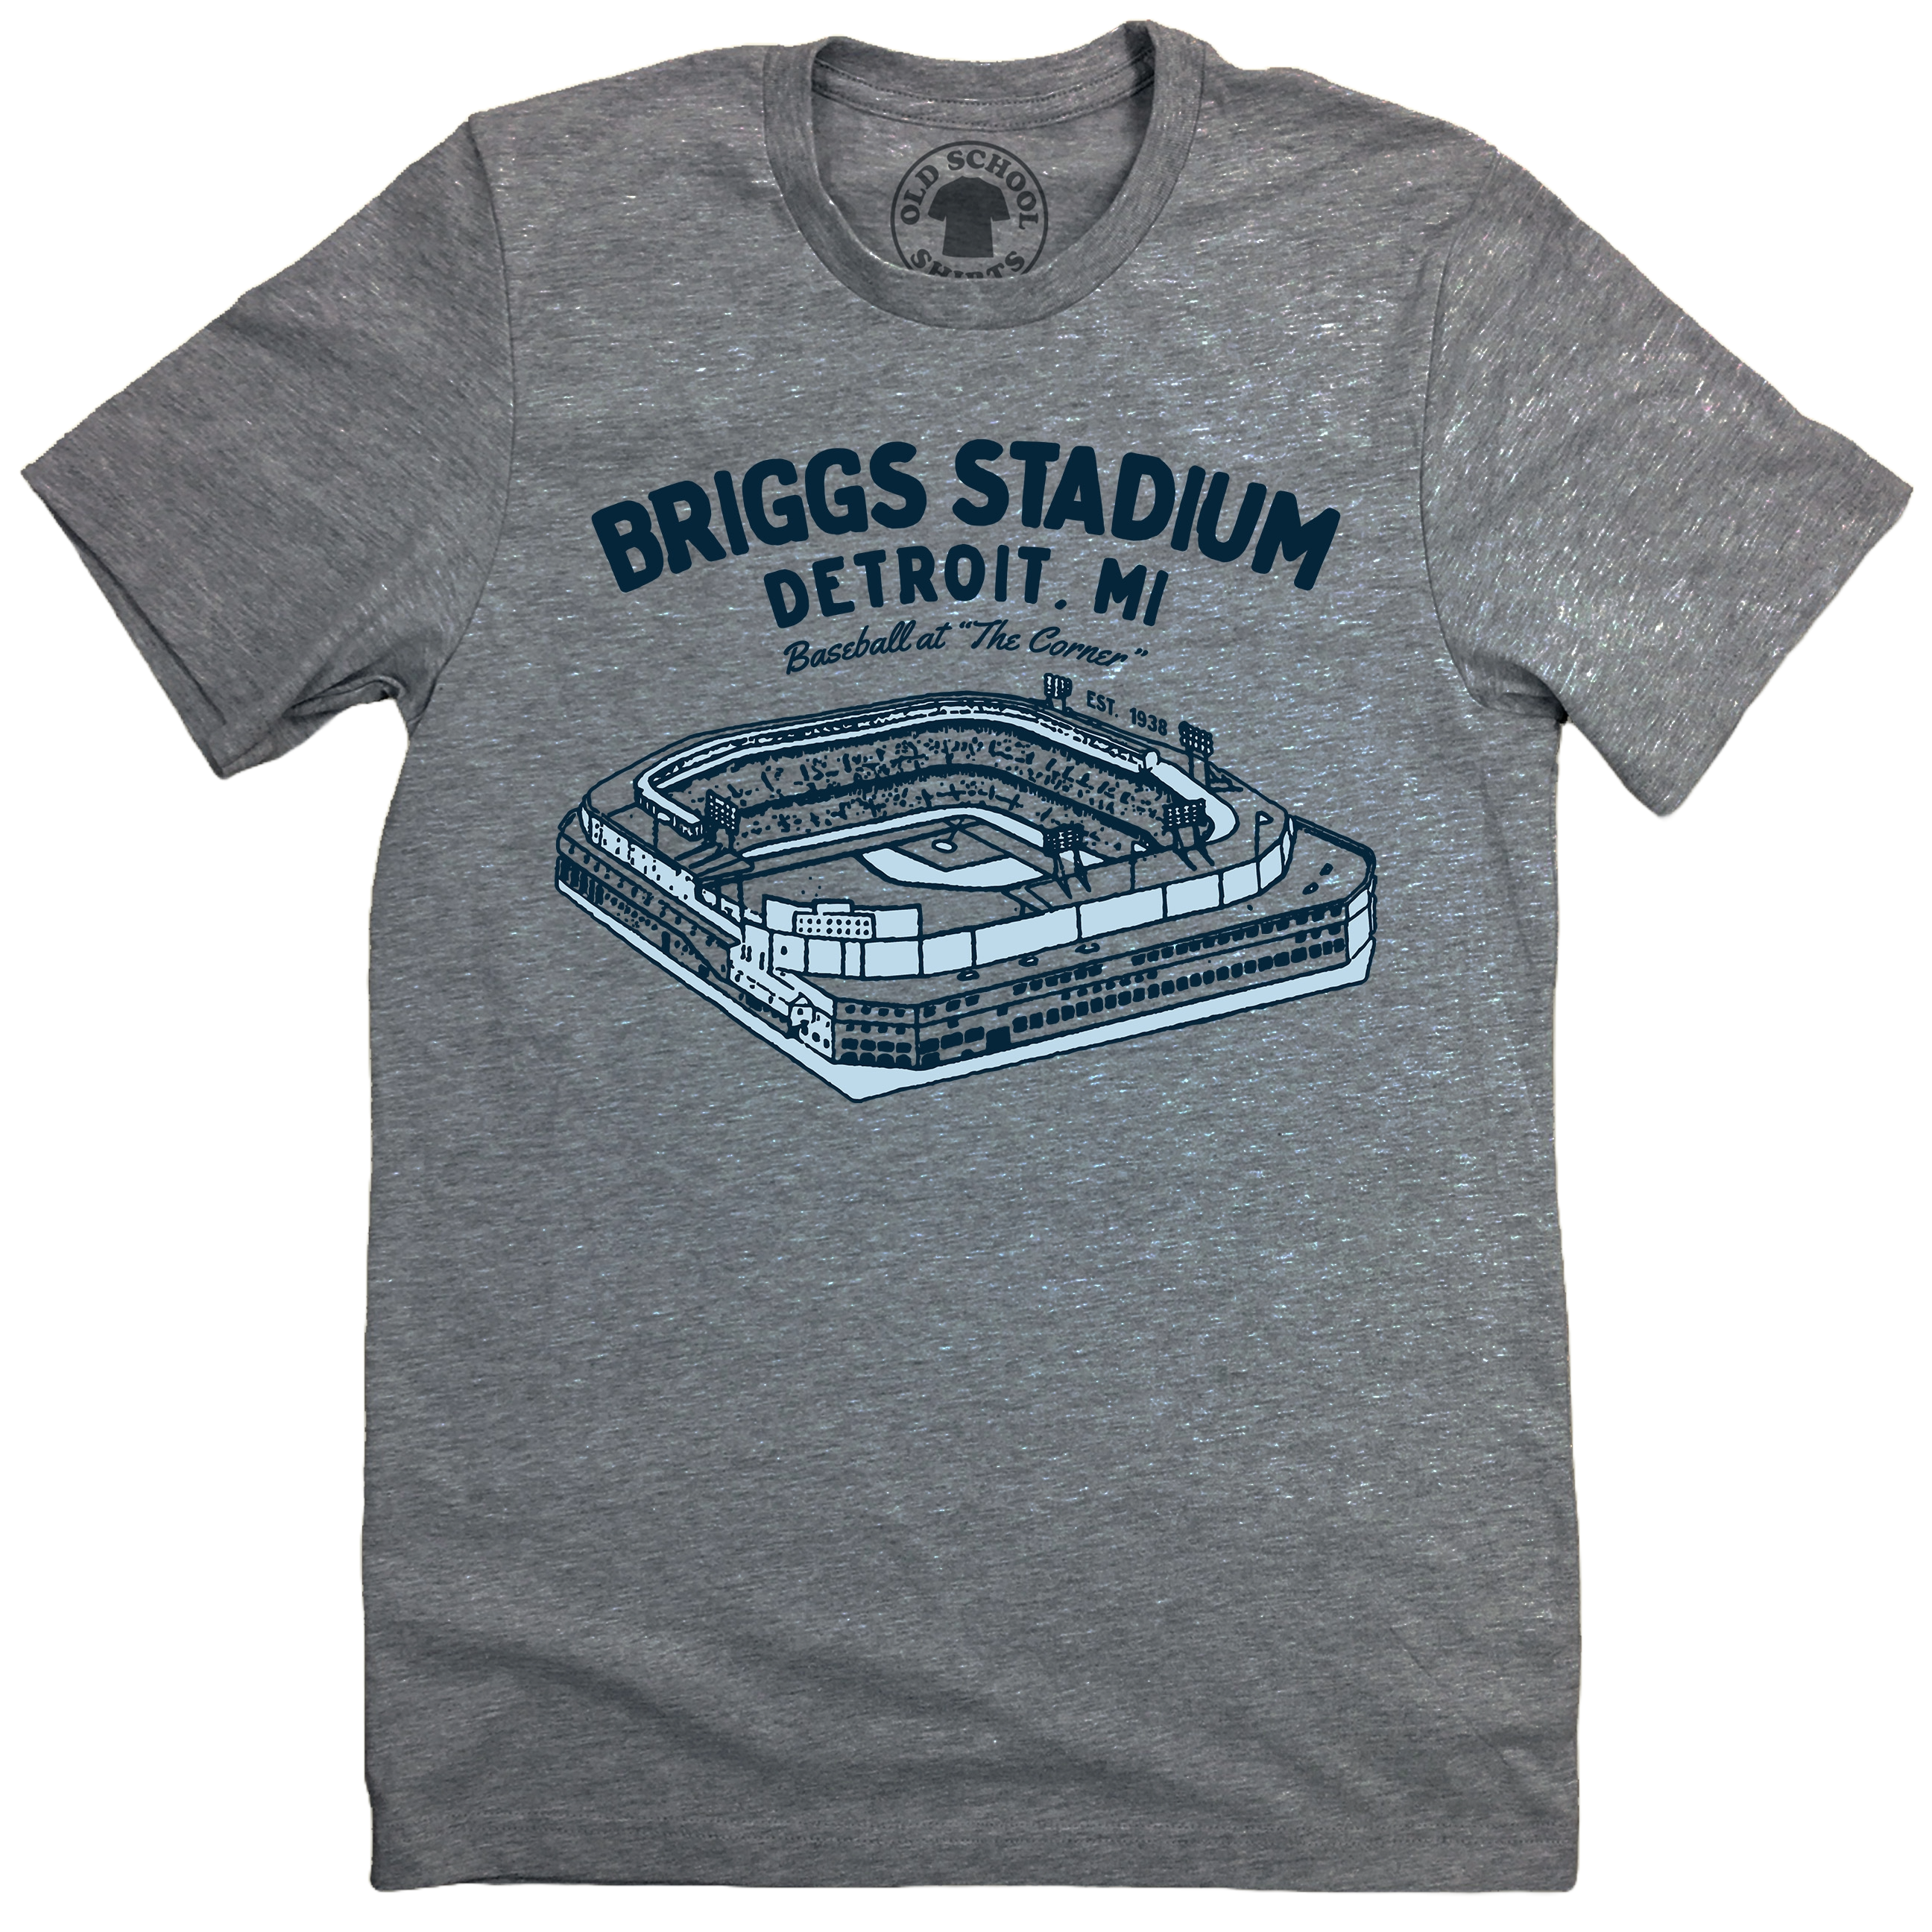 Briggs Stadium Tee | Vintage Detroit Apparel | Old School Shirts